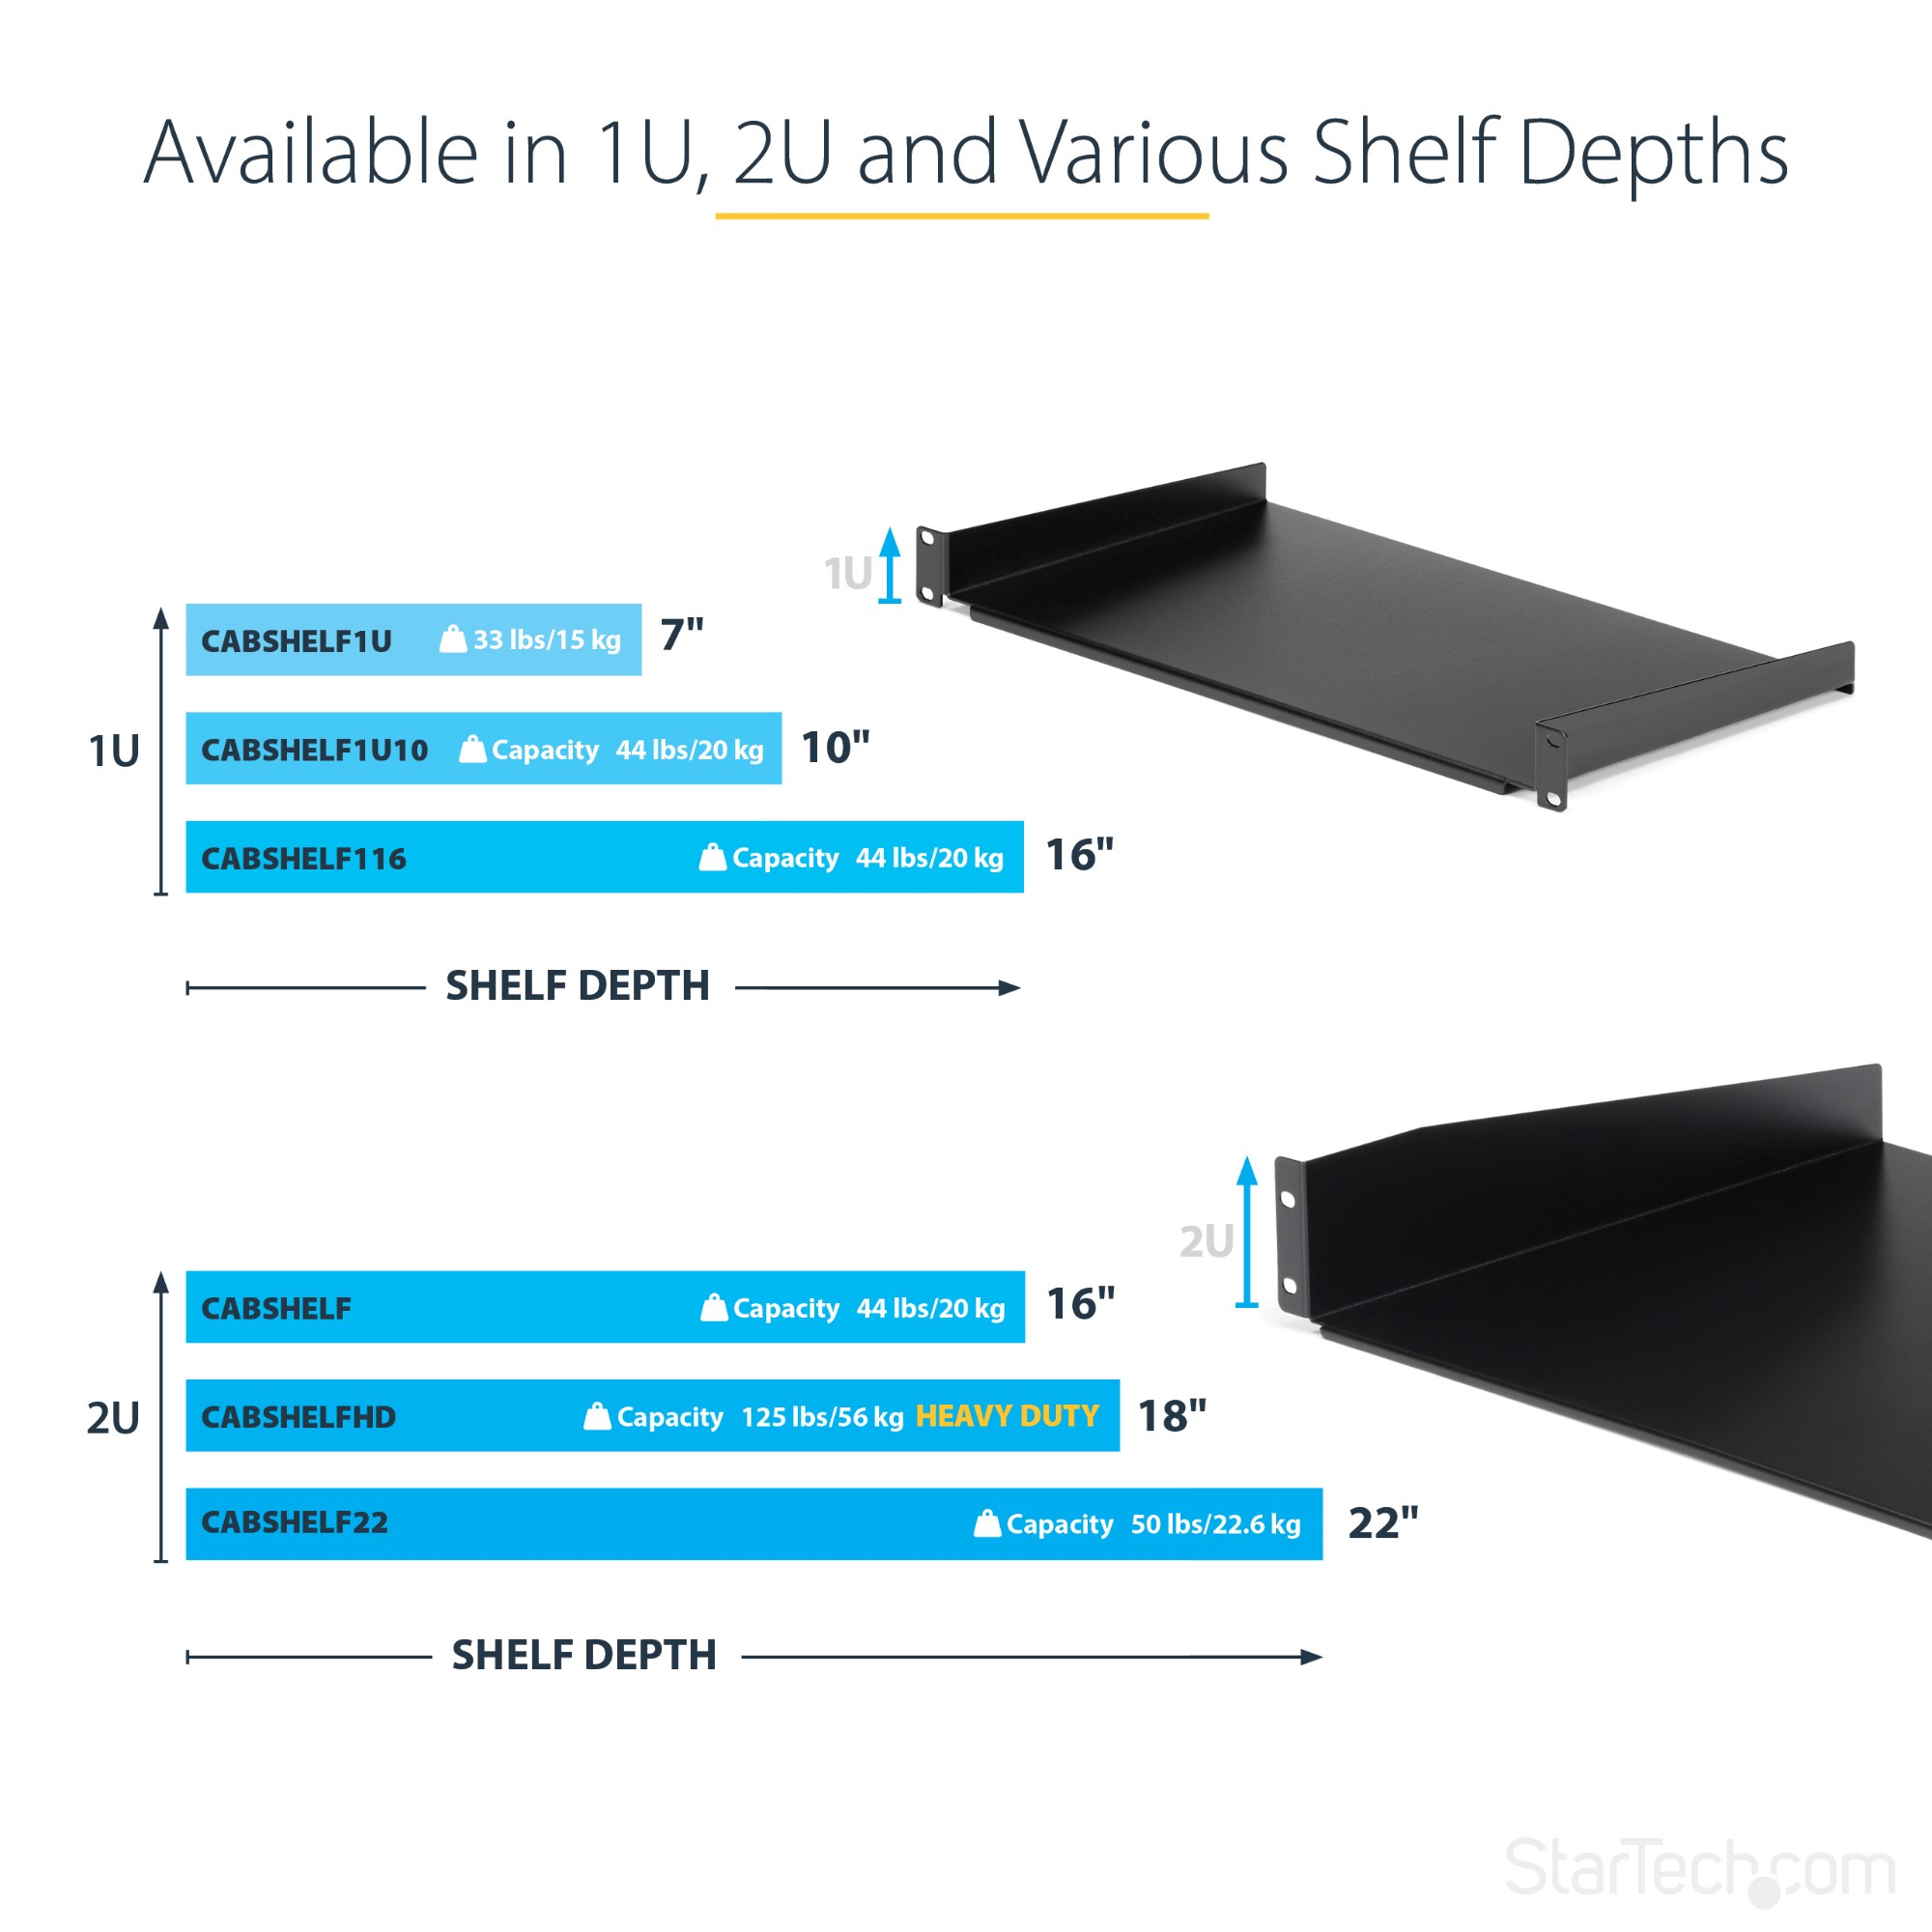 StarTech.com 1U 7in Depth Universal Fixed Rack Mount Shelf &ndash; 33lbs / 15kg